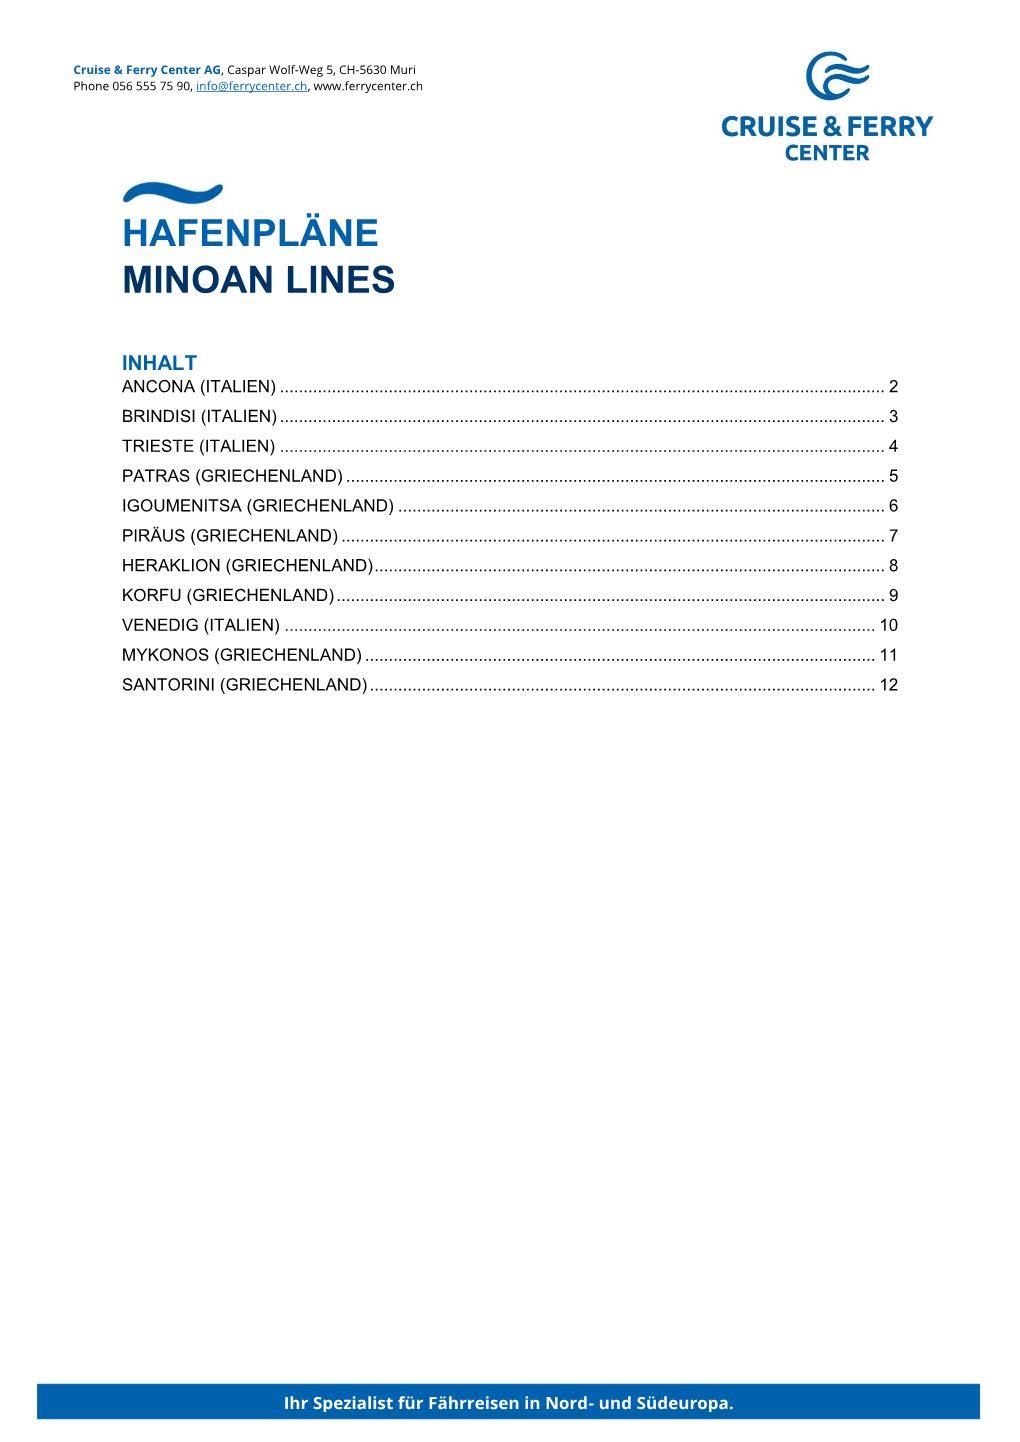 Hafenpläne Minoan Lines